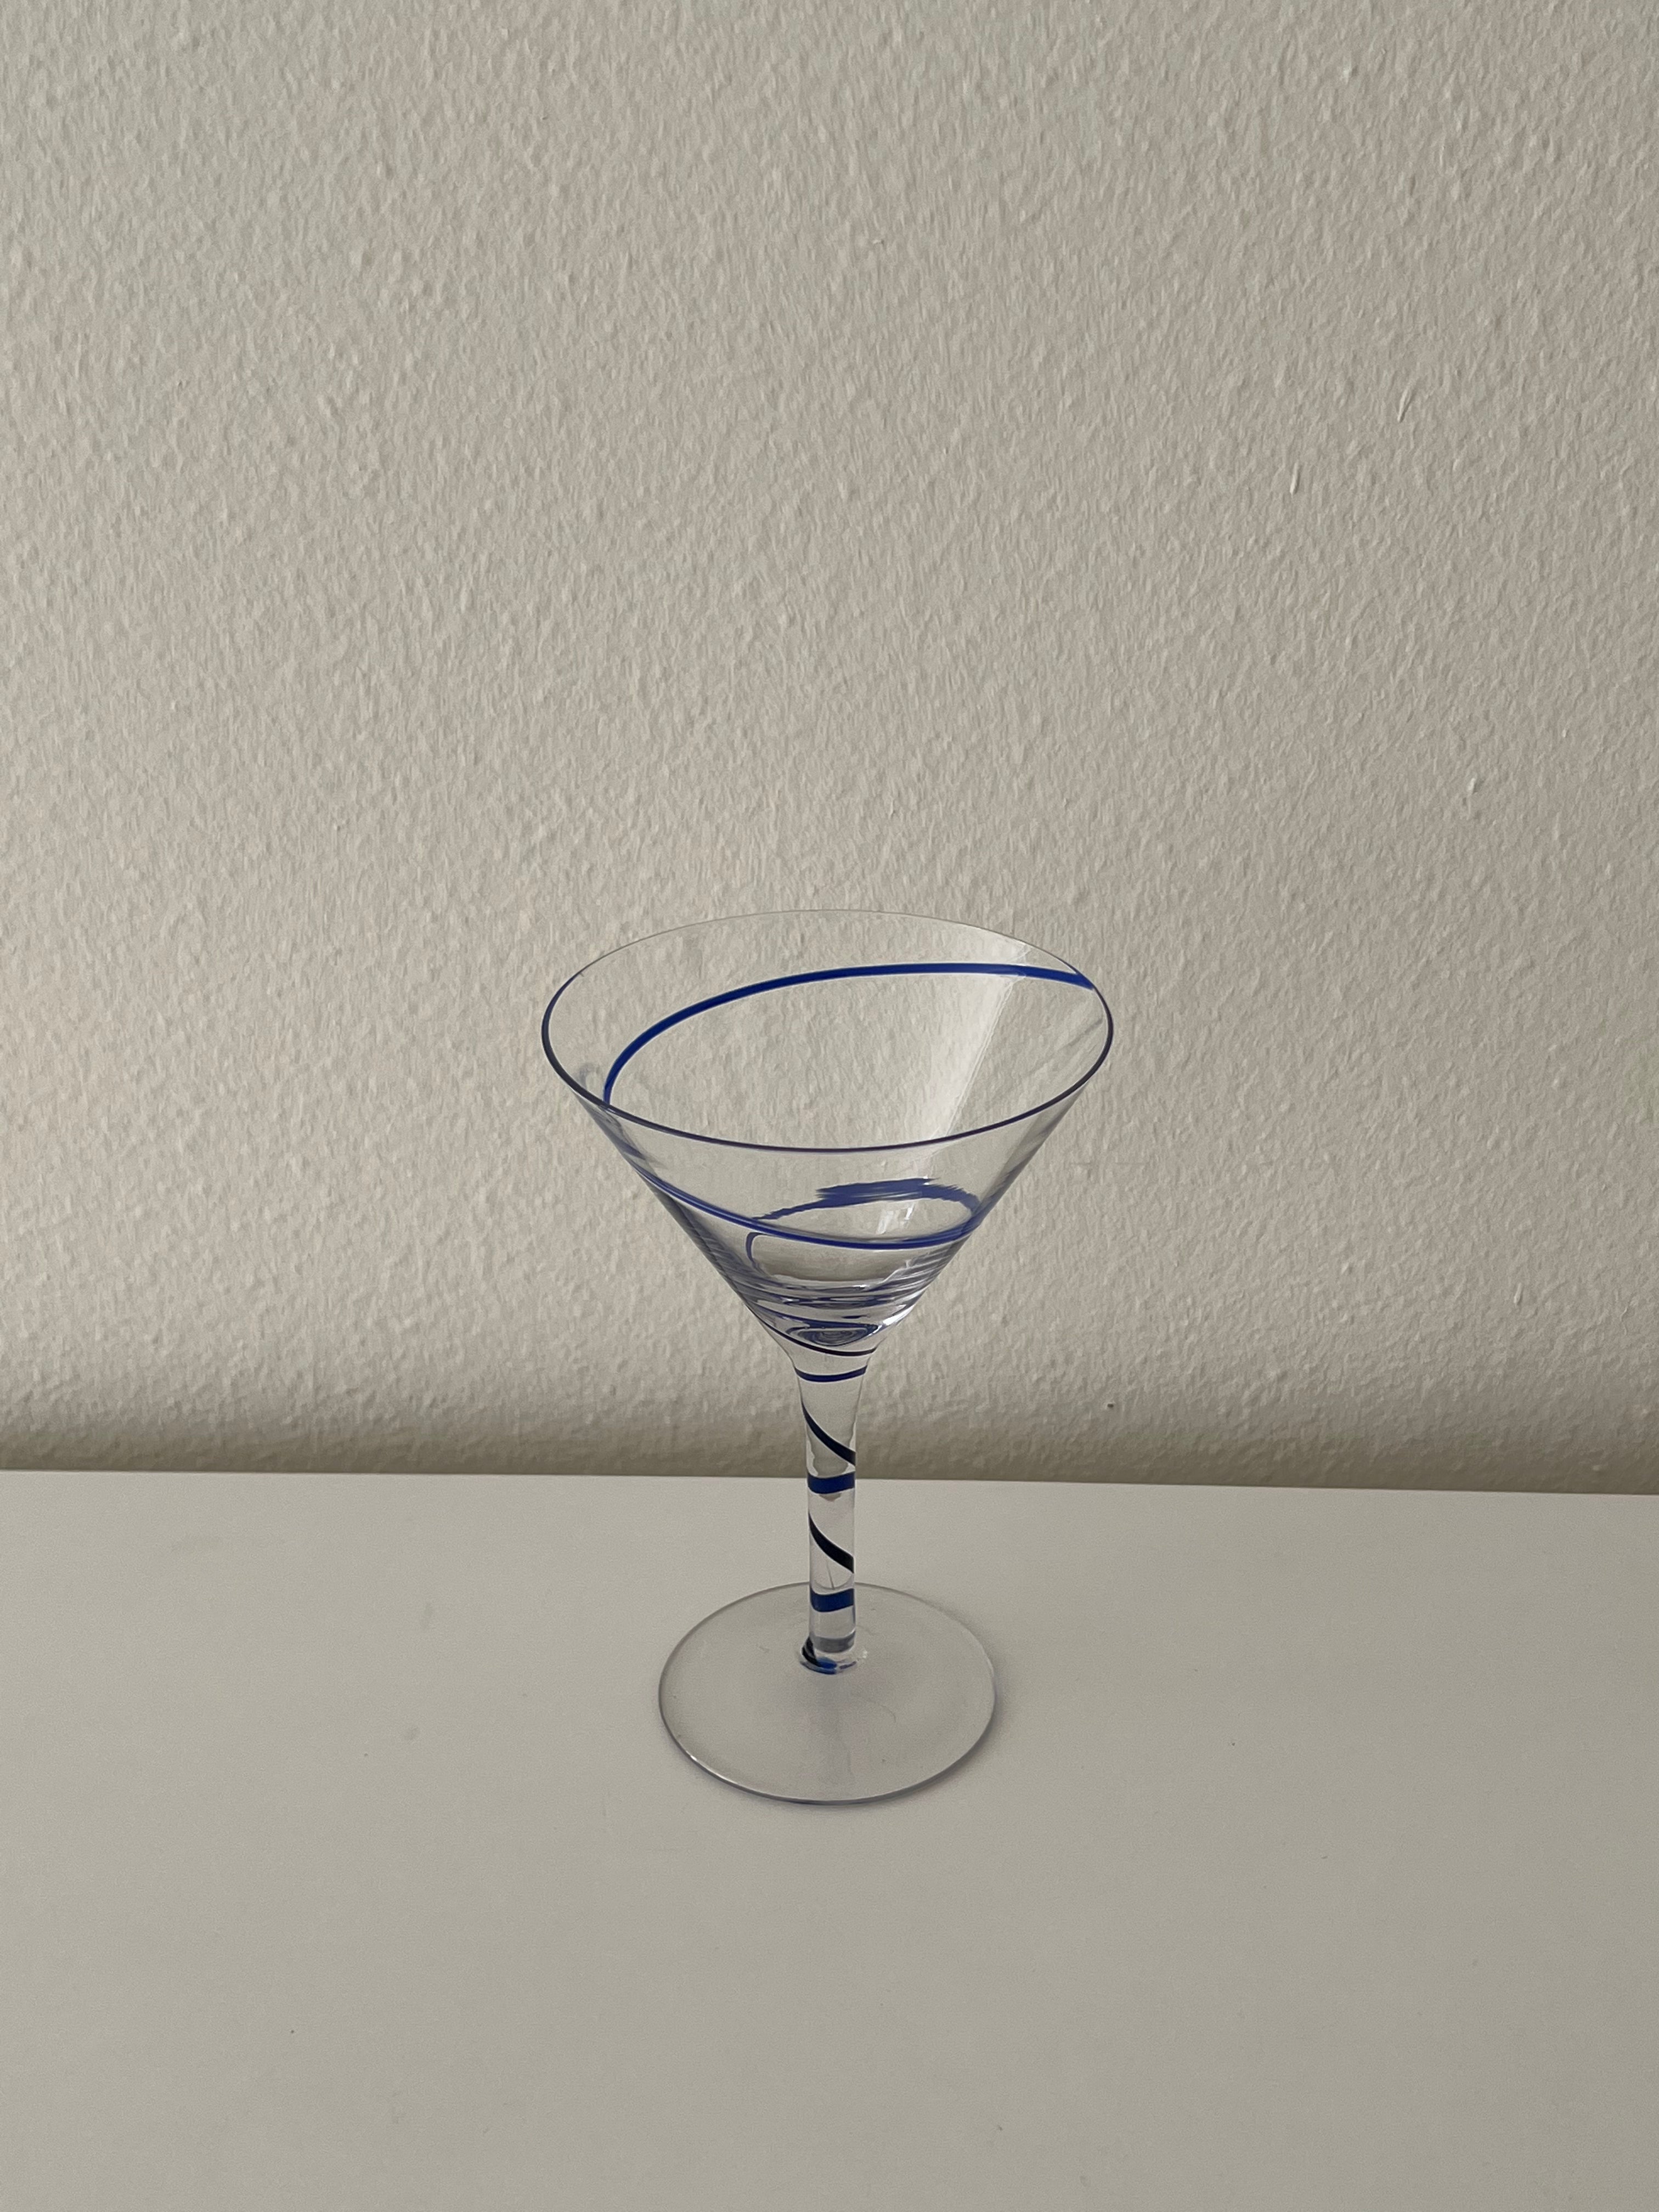 Cobalt Blue Spiral Martini Glasses